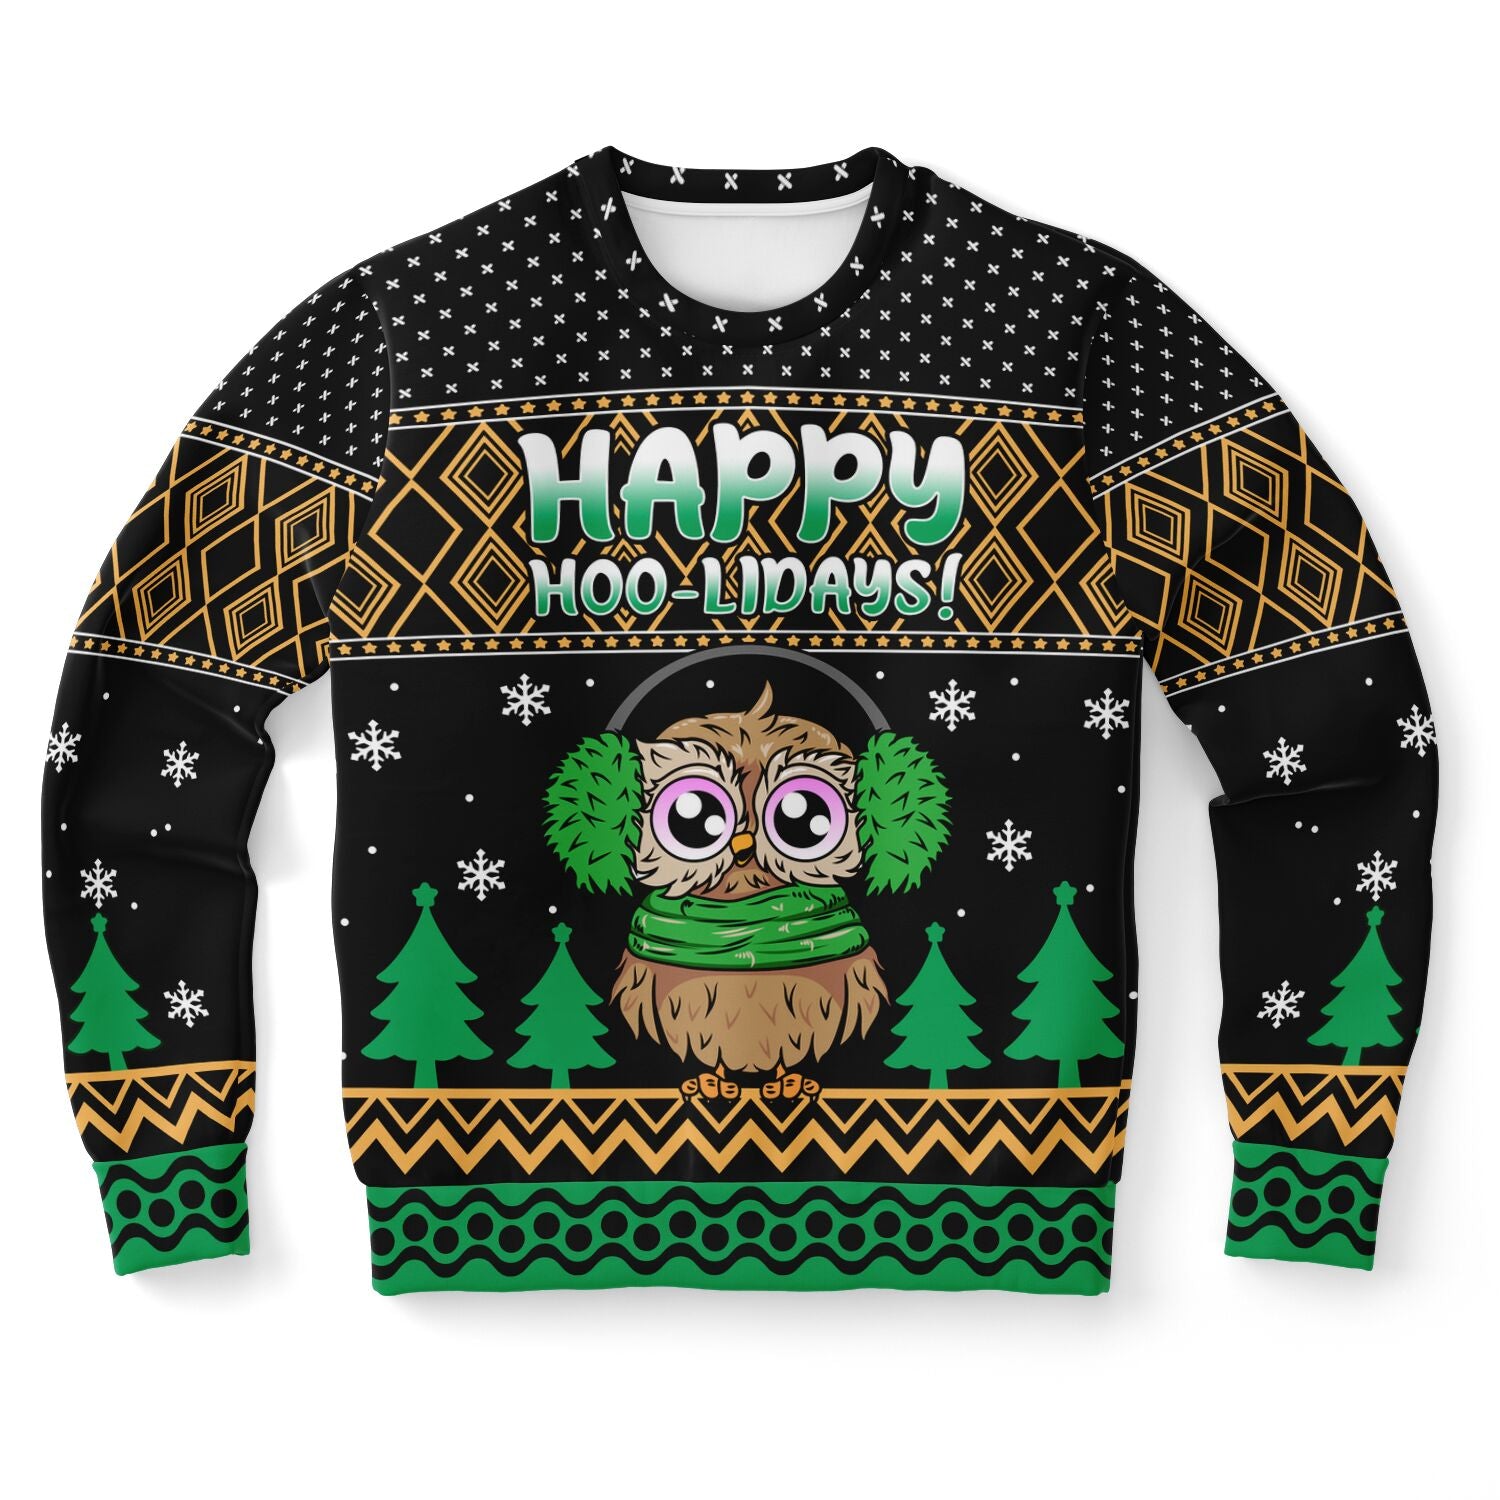 Happy Hoo-lidays Christmas Fashion Adult Sweatshirt